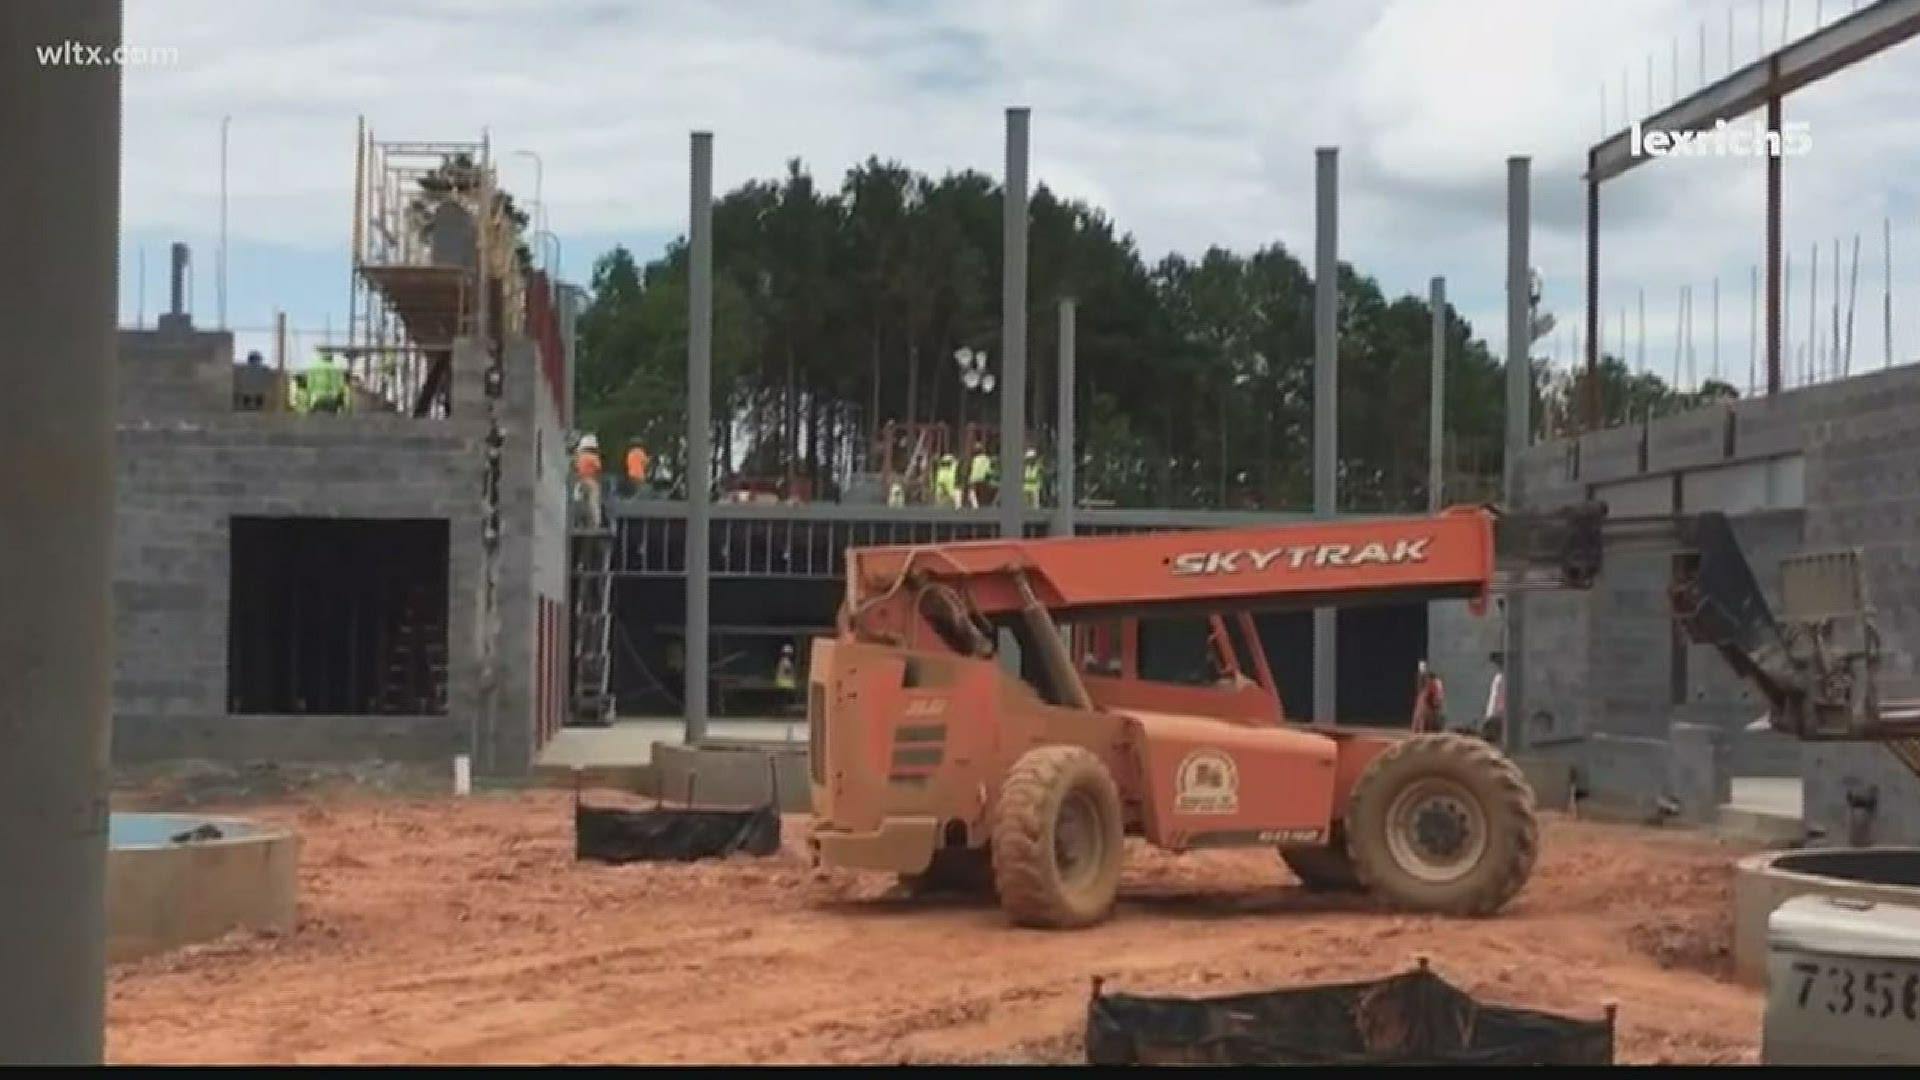 Contractors say the school construction is on schedule